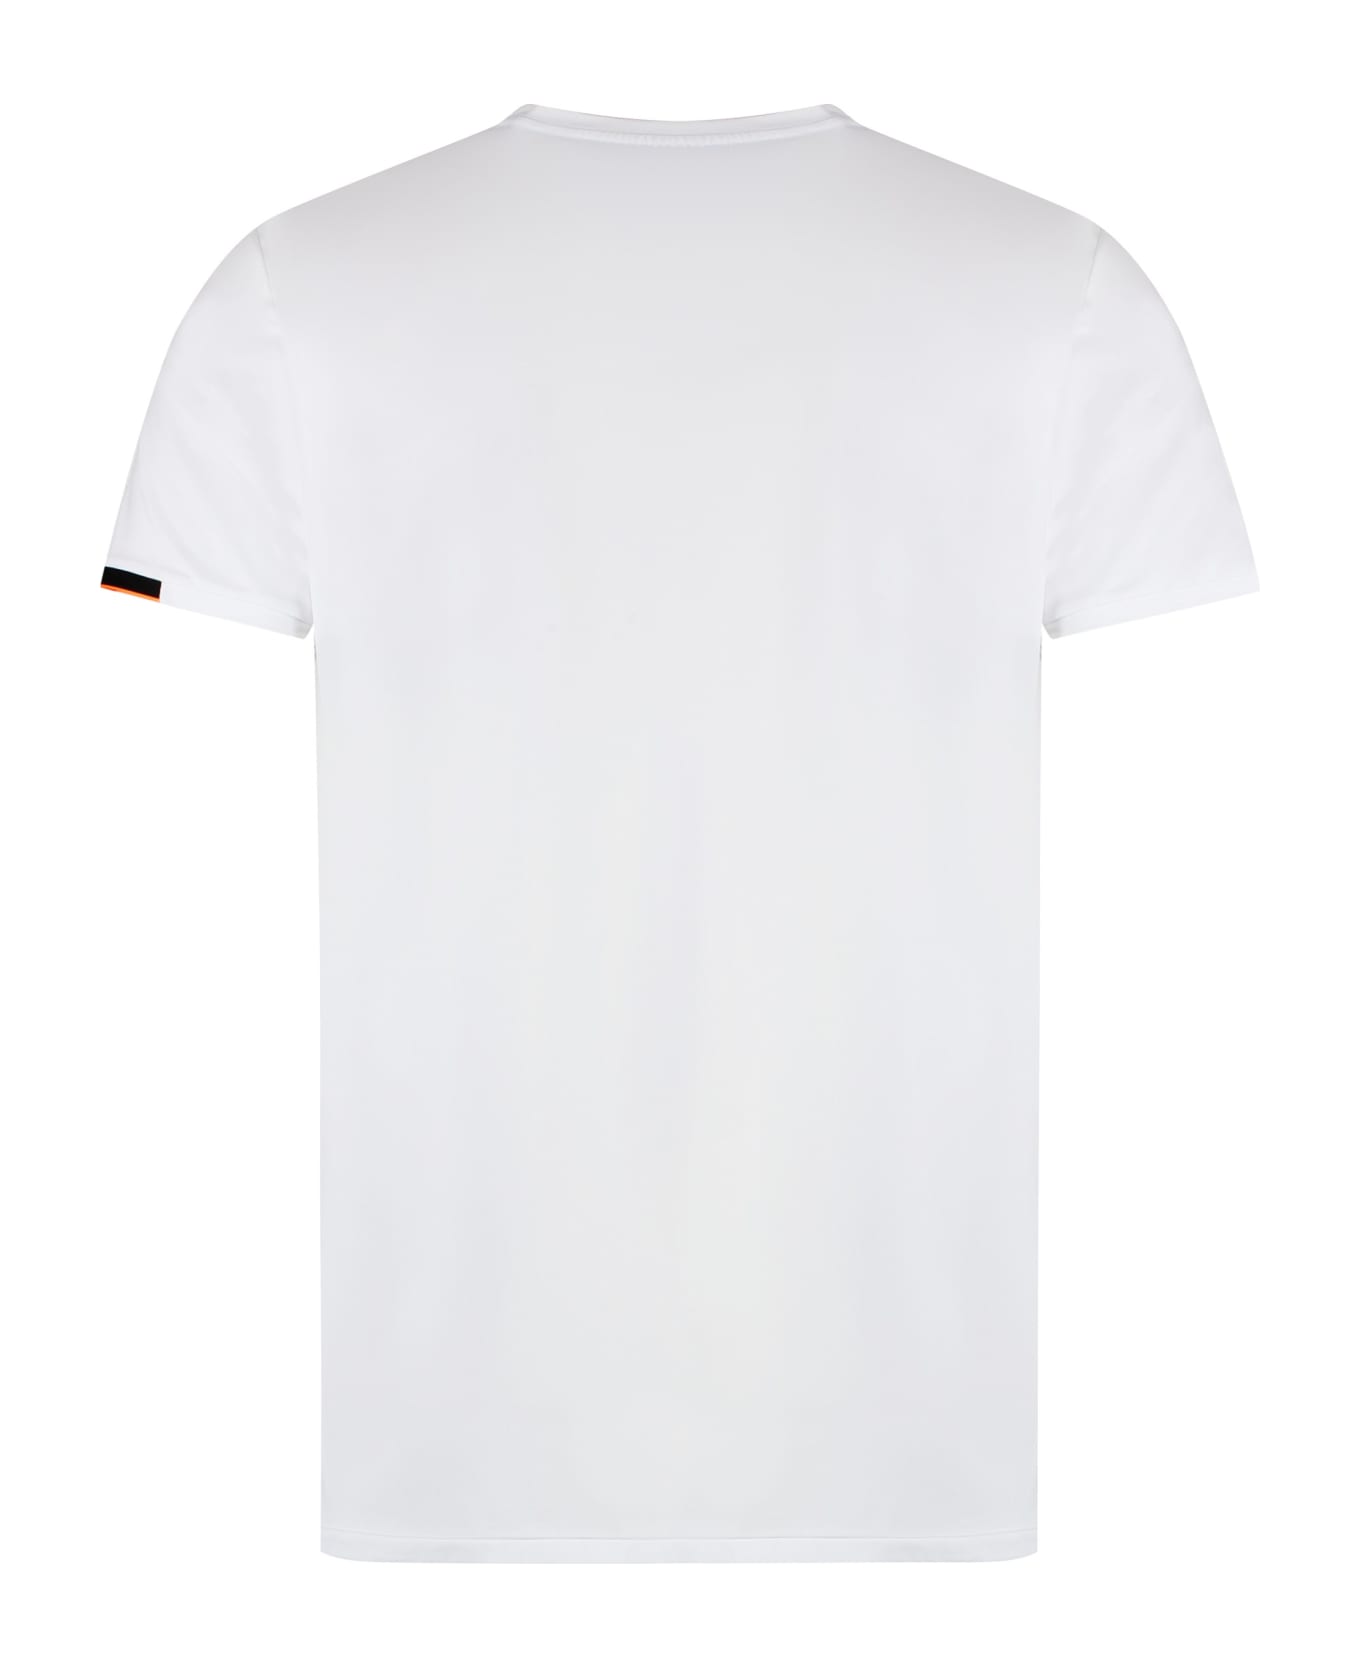 RRD - Roberto Ricci Design Oxford Techno Fabric T-shirt - White